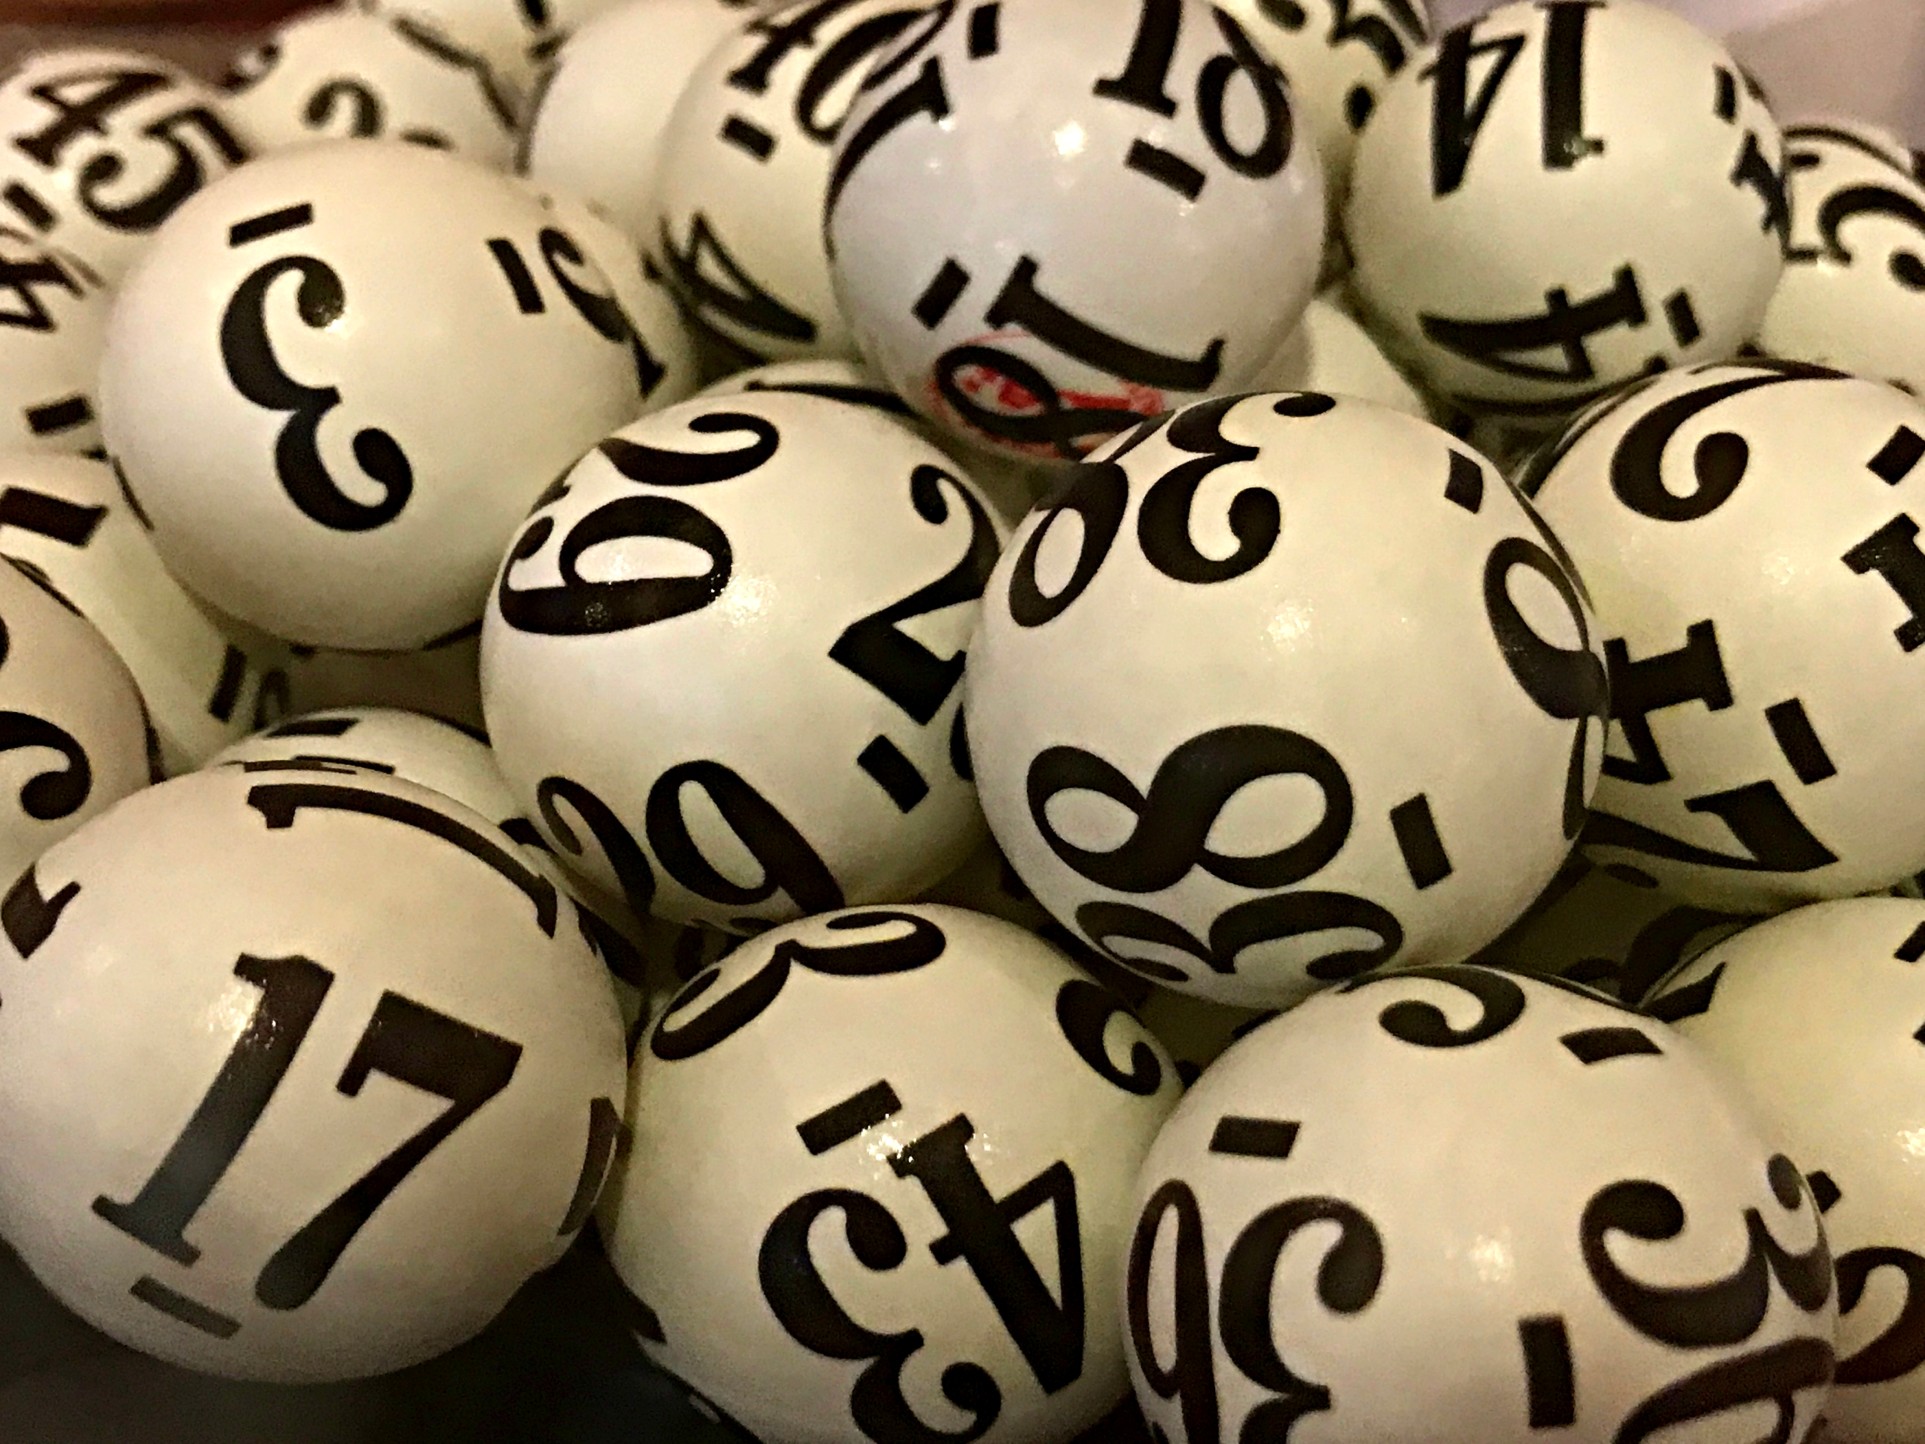 Lotto in anderem bundesland spielen